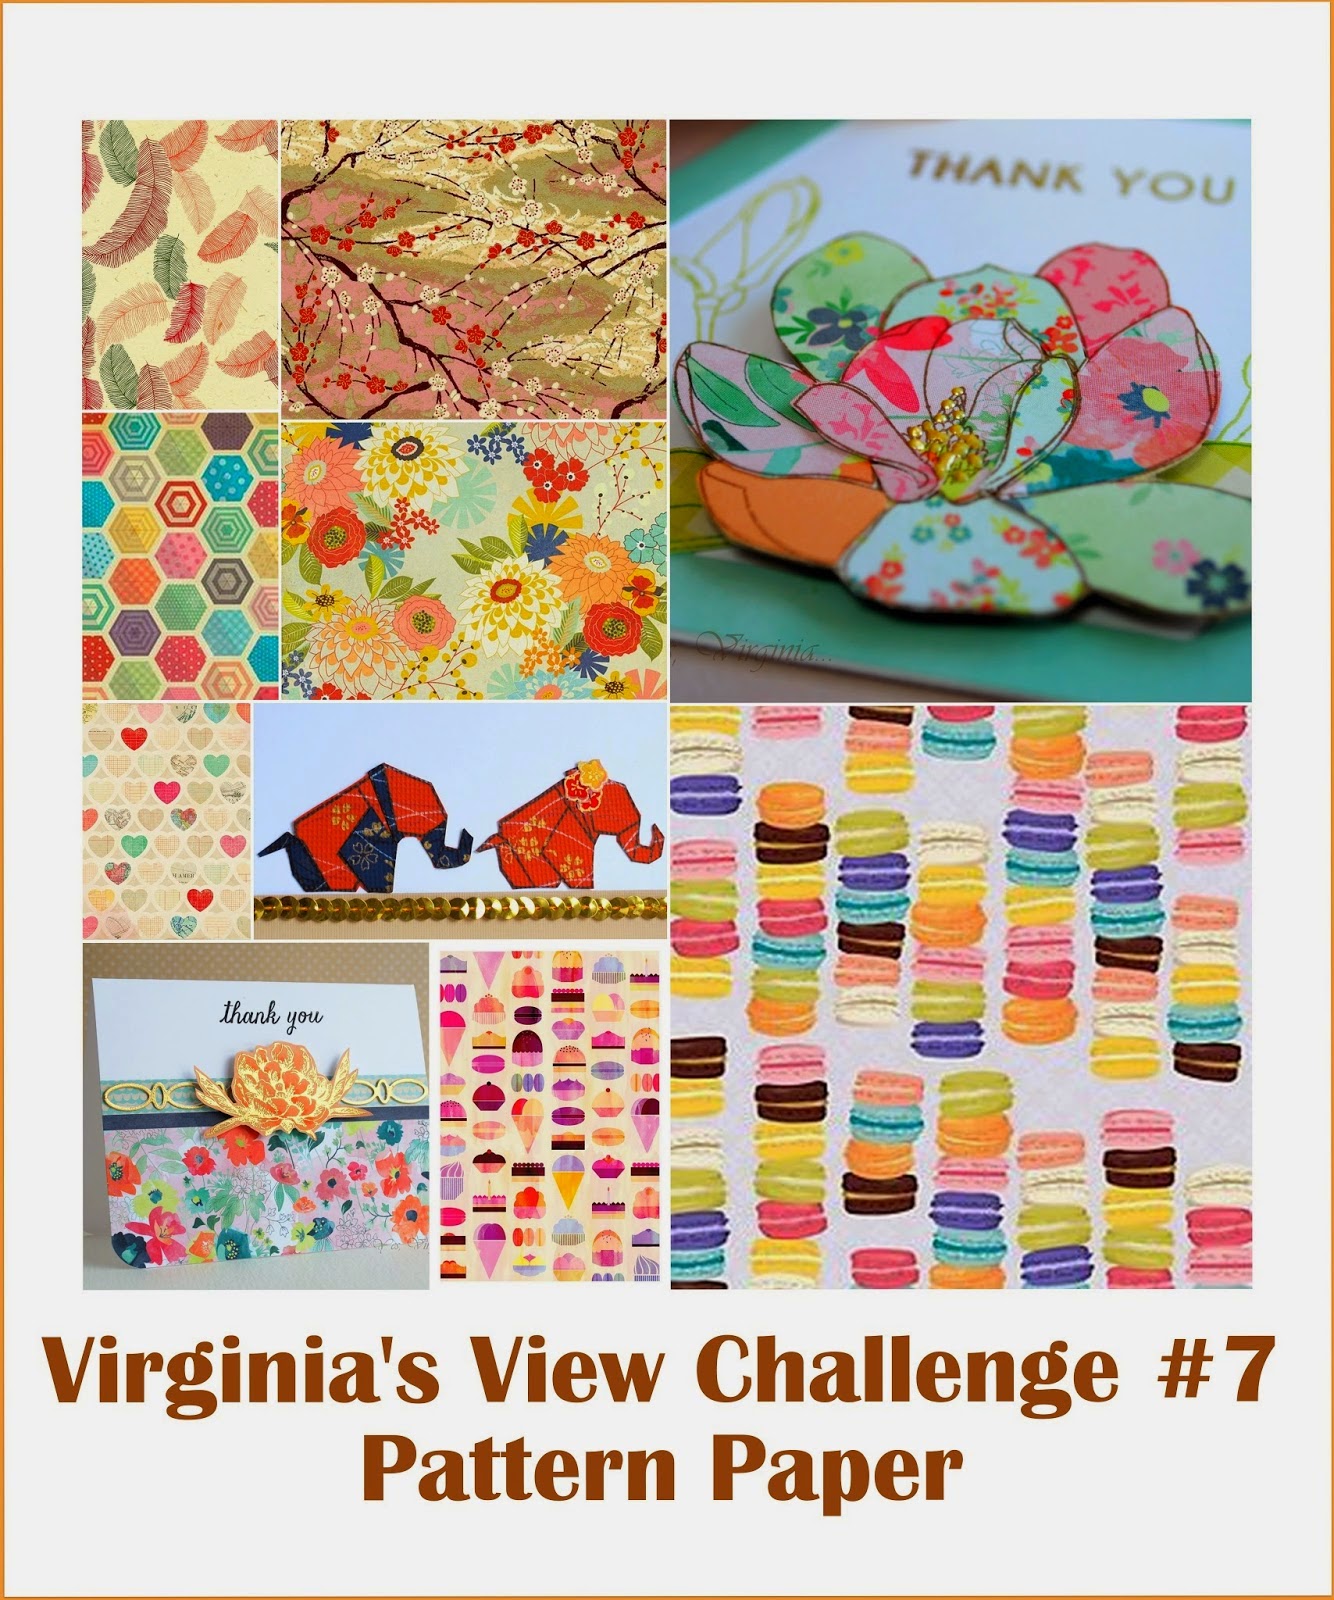 http://virginiasviewchallenge.blogspot.com.au/2014/09/virginias-view-challenge-7.html